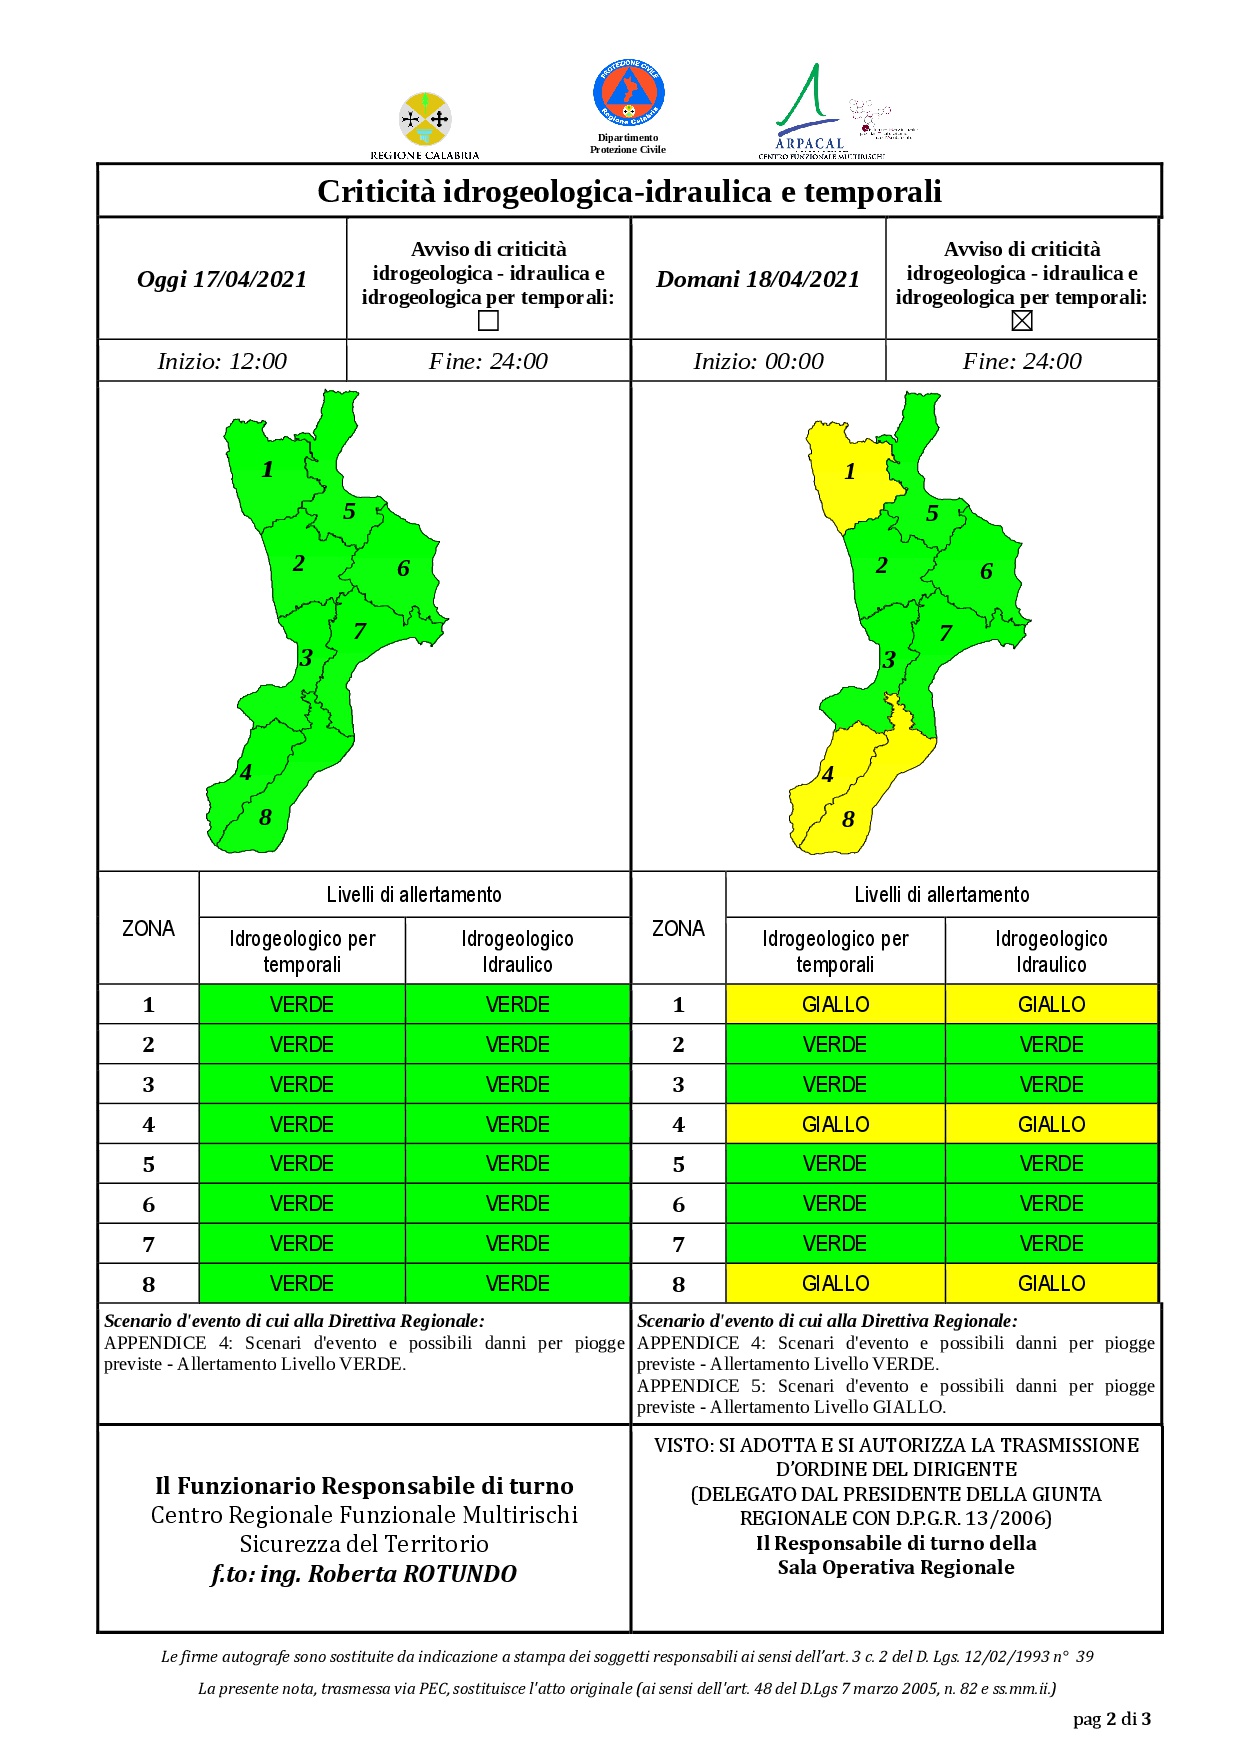 Criticità idrogeologica-idraulica e temporali in Calabria 17-04-2021